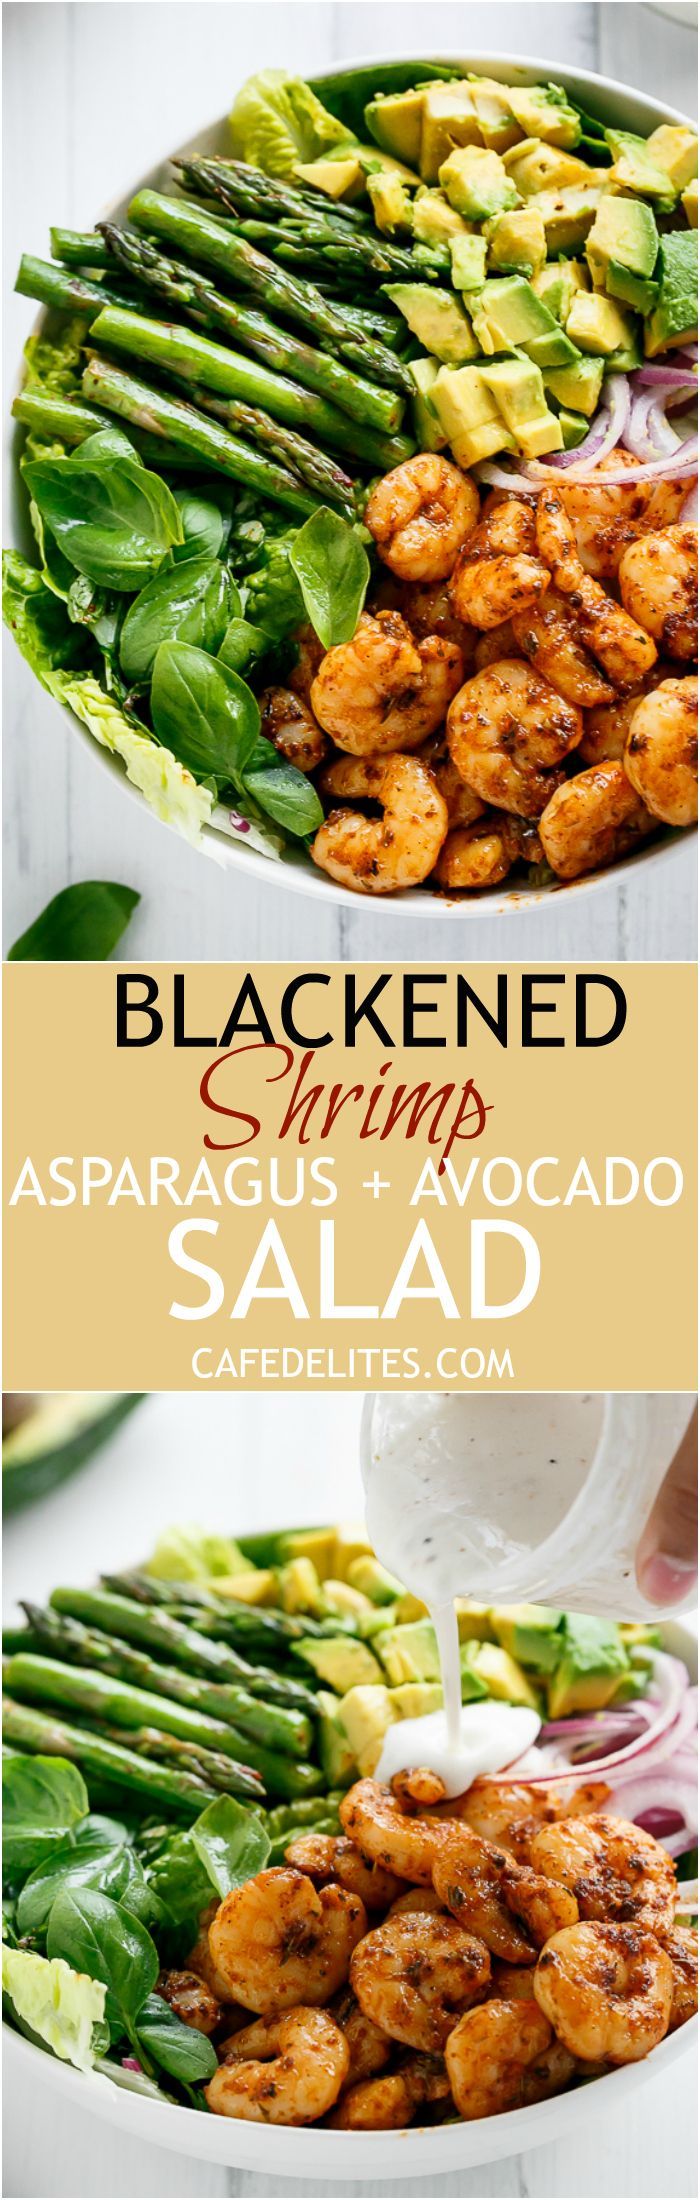 Blackened Shrimp, Asparagus and Avocado Salad with Lemon Pepper Yogurt Dressing is